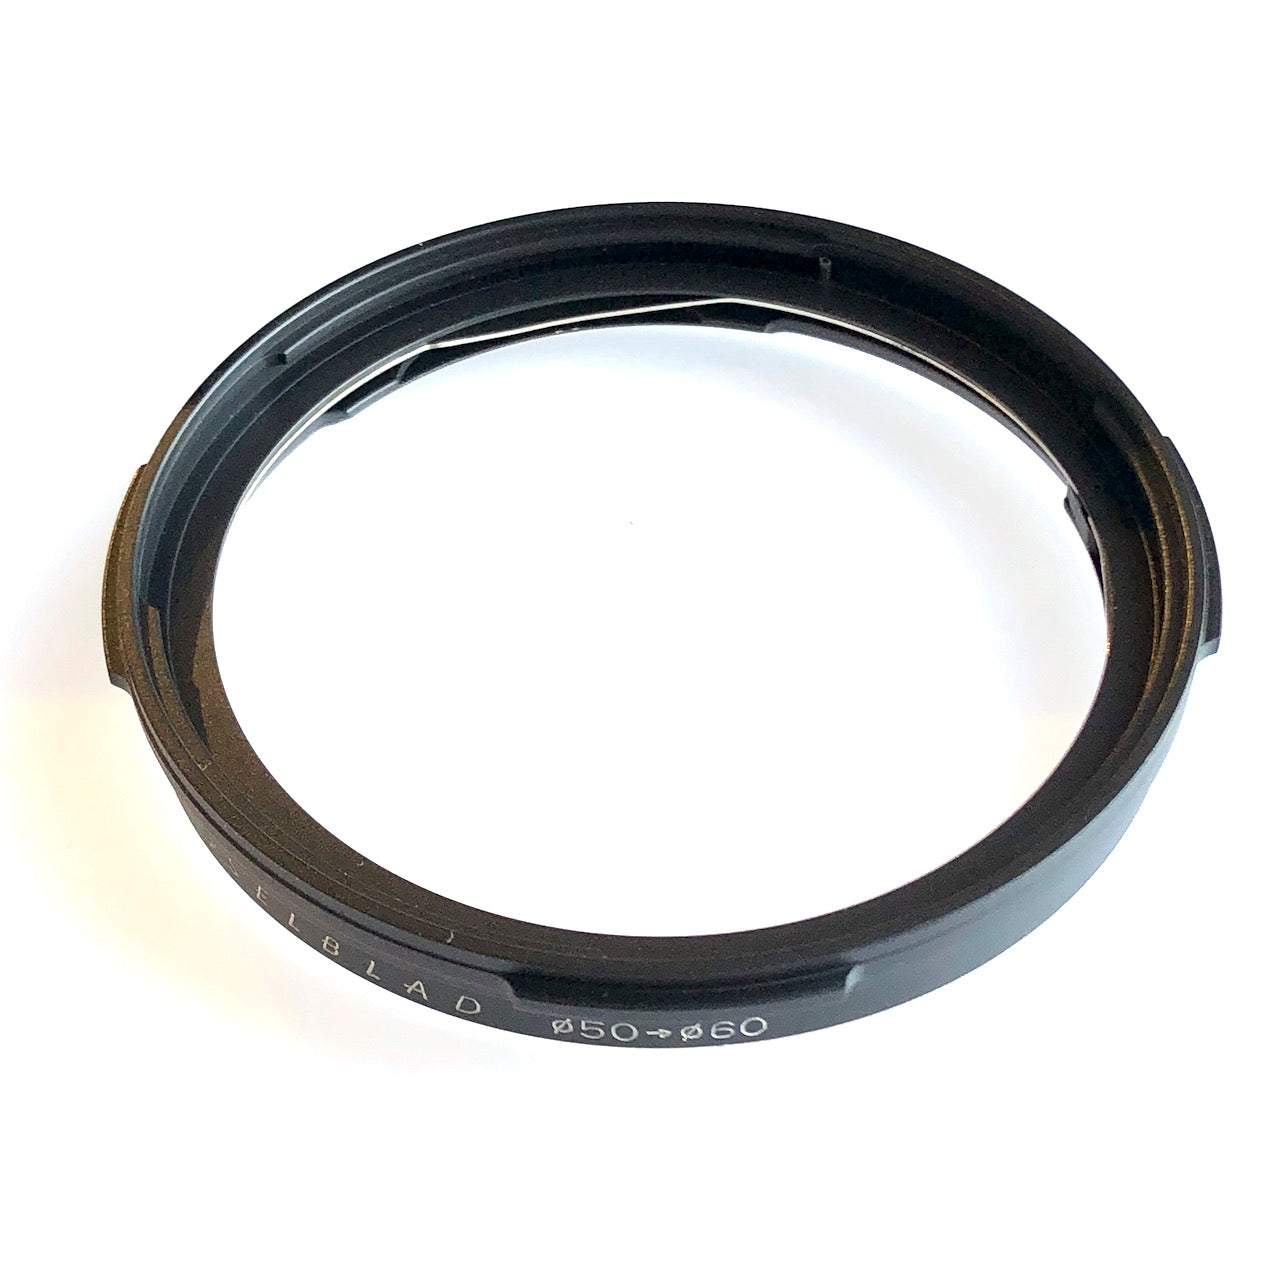 Hasselblad B50-B60 adapter ring